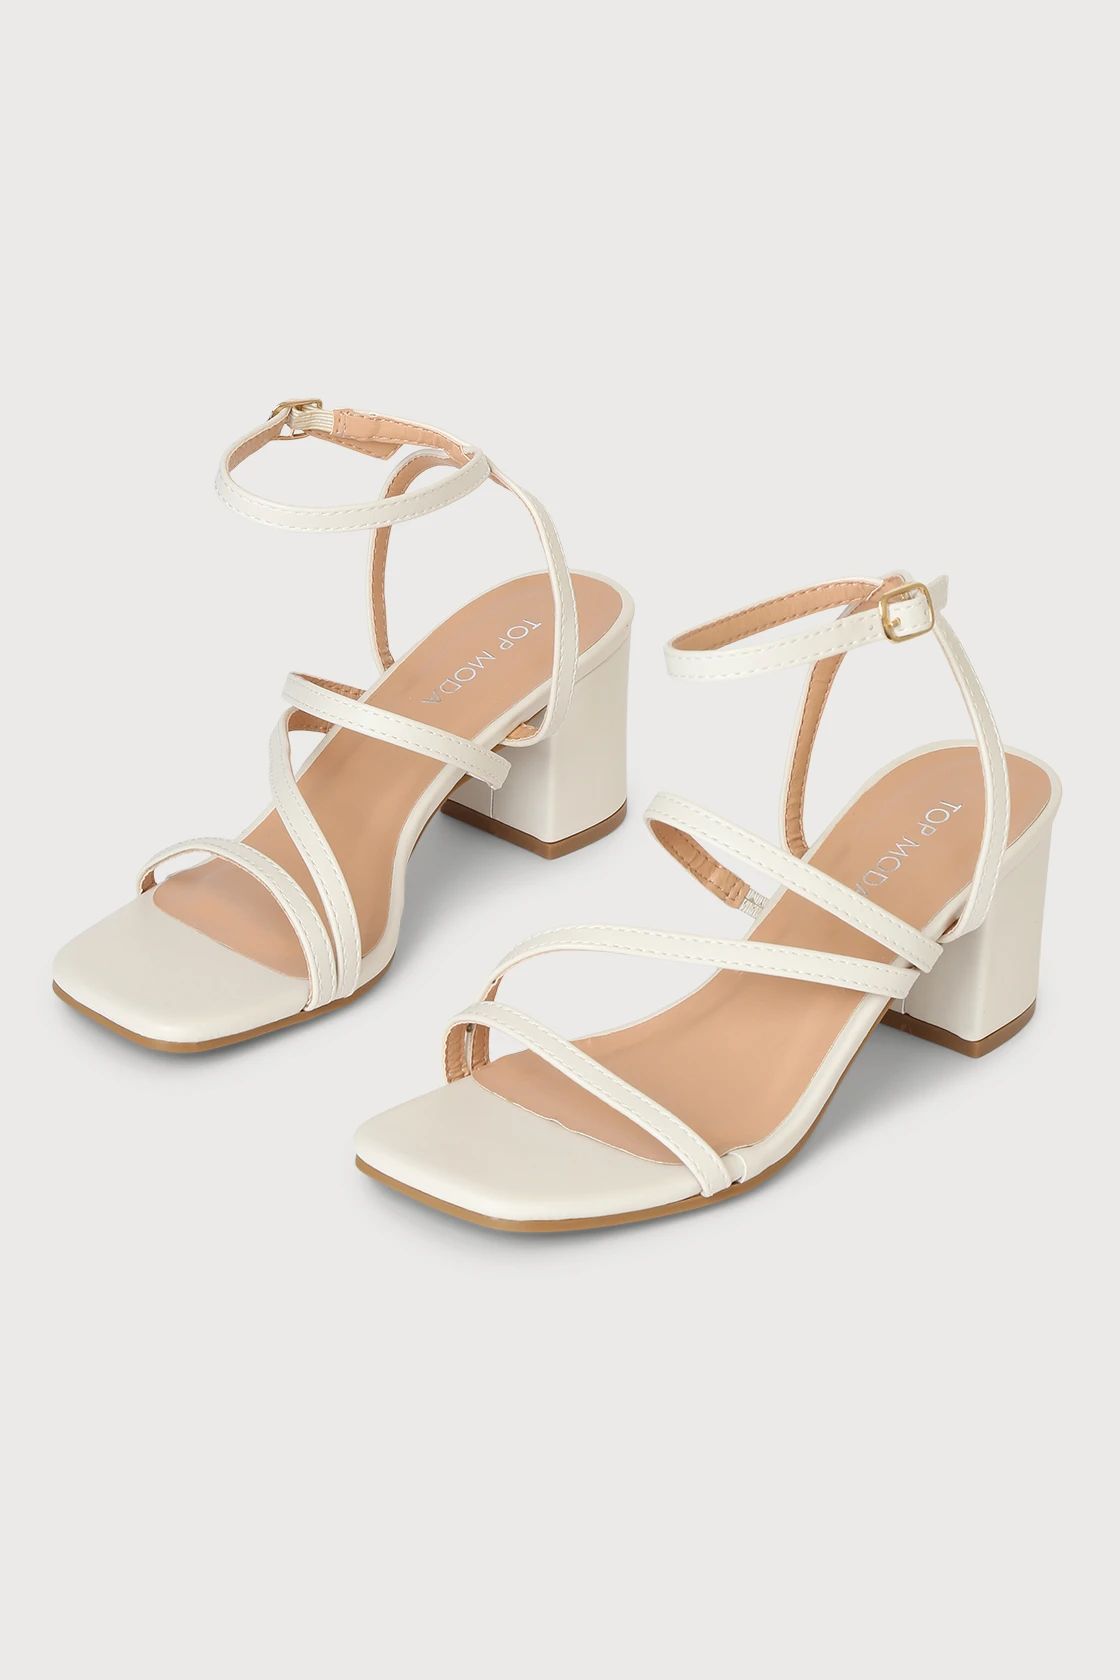 Marleigh Ivory Ankle Strap High Heel Sandals | Lulus